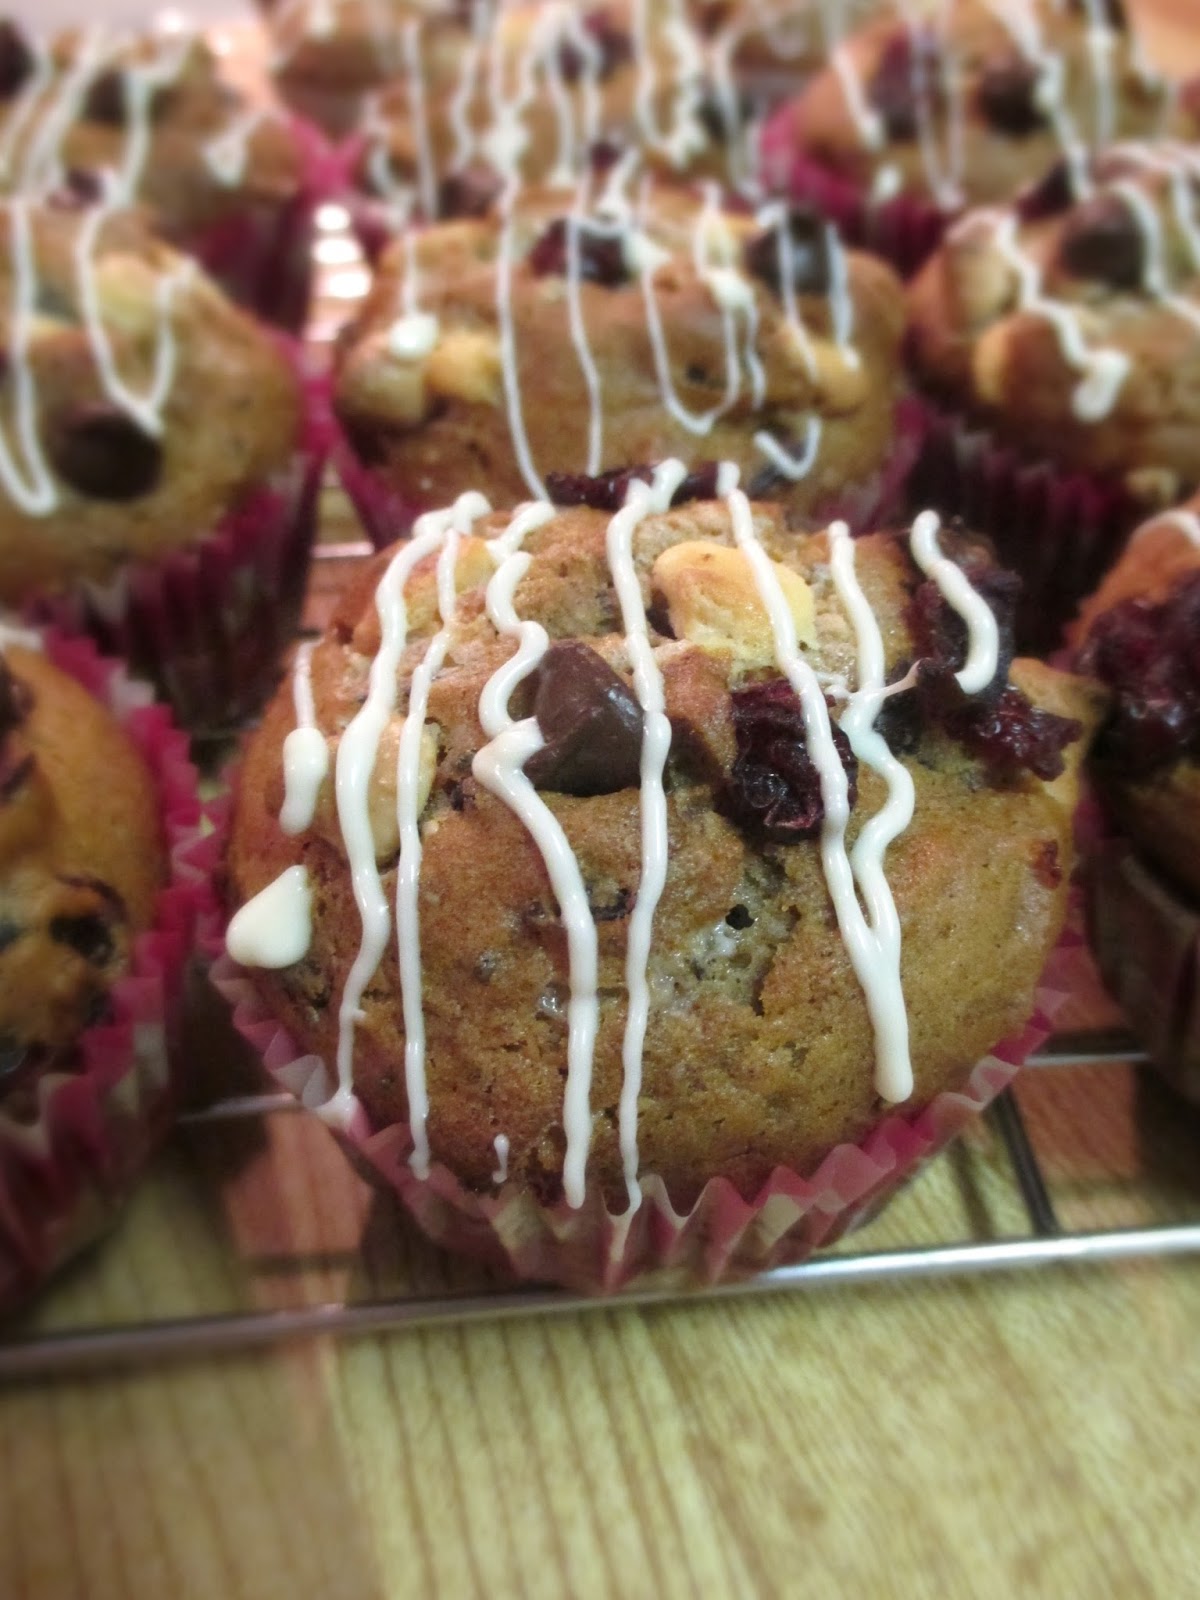 Just my Stuff: Cranberry Chocolate Muffins